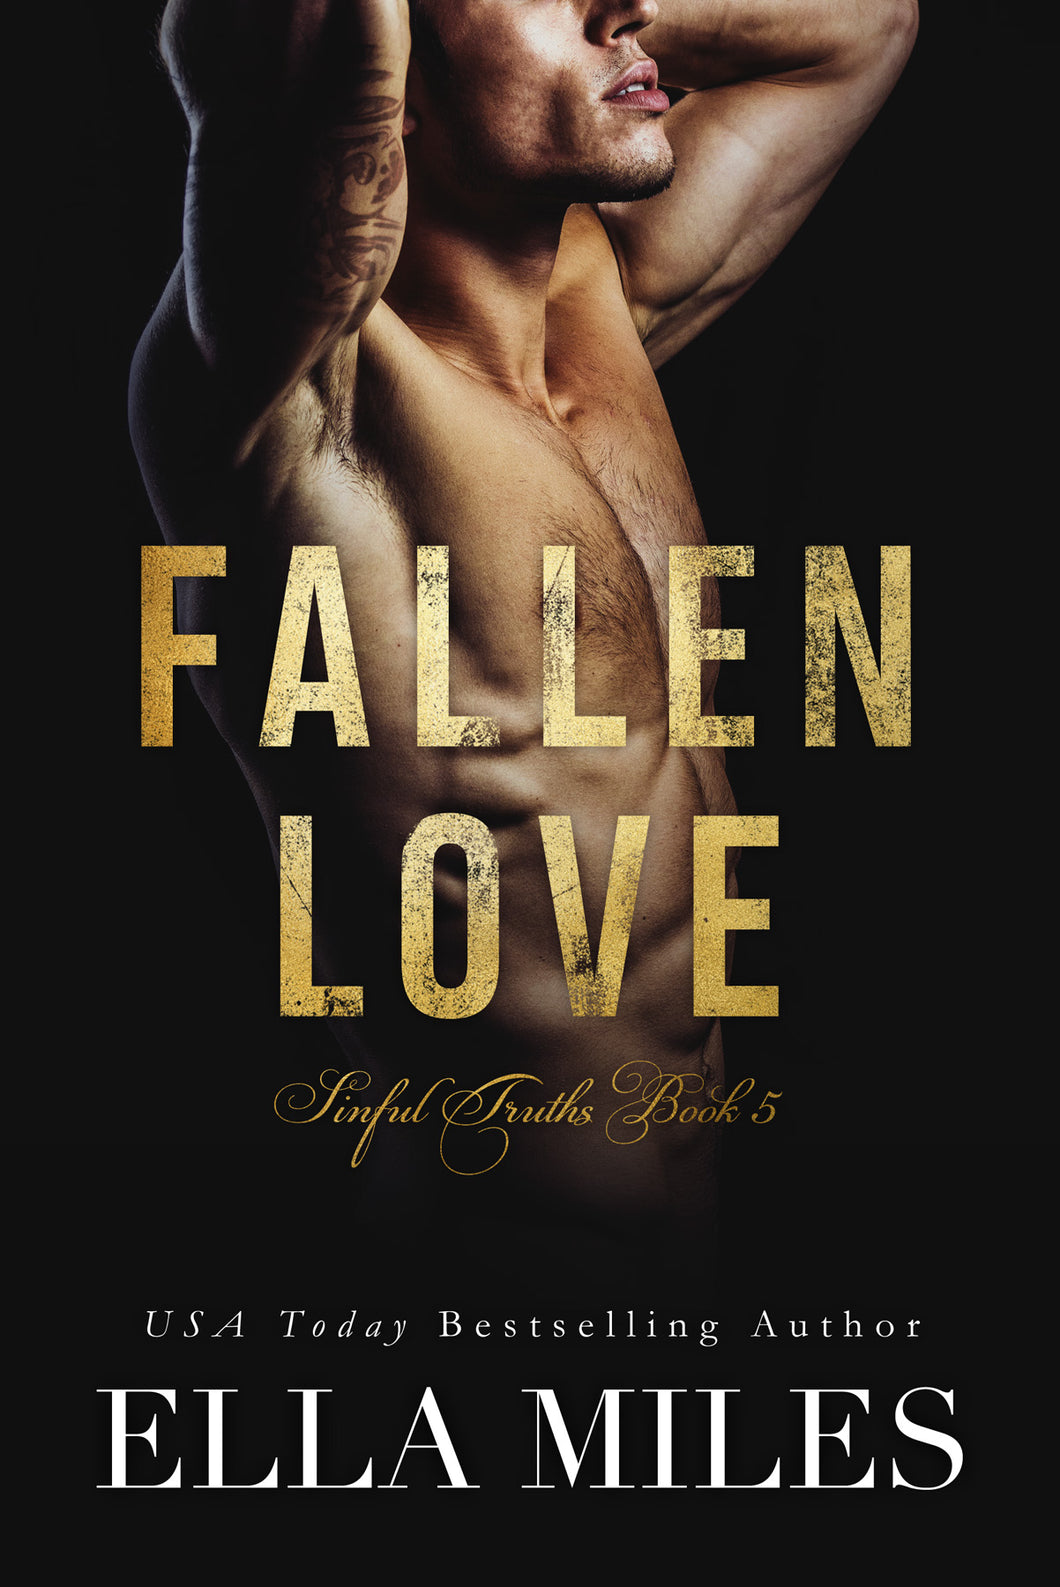 Fallen Love (Sinful Truths 5)